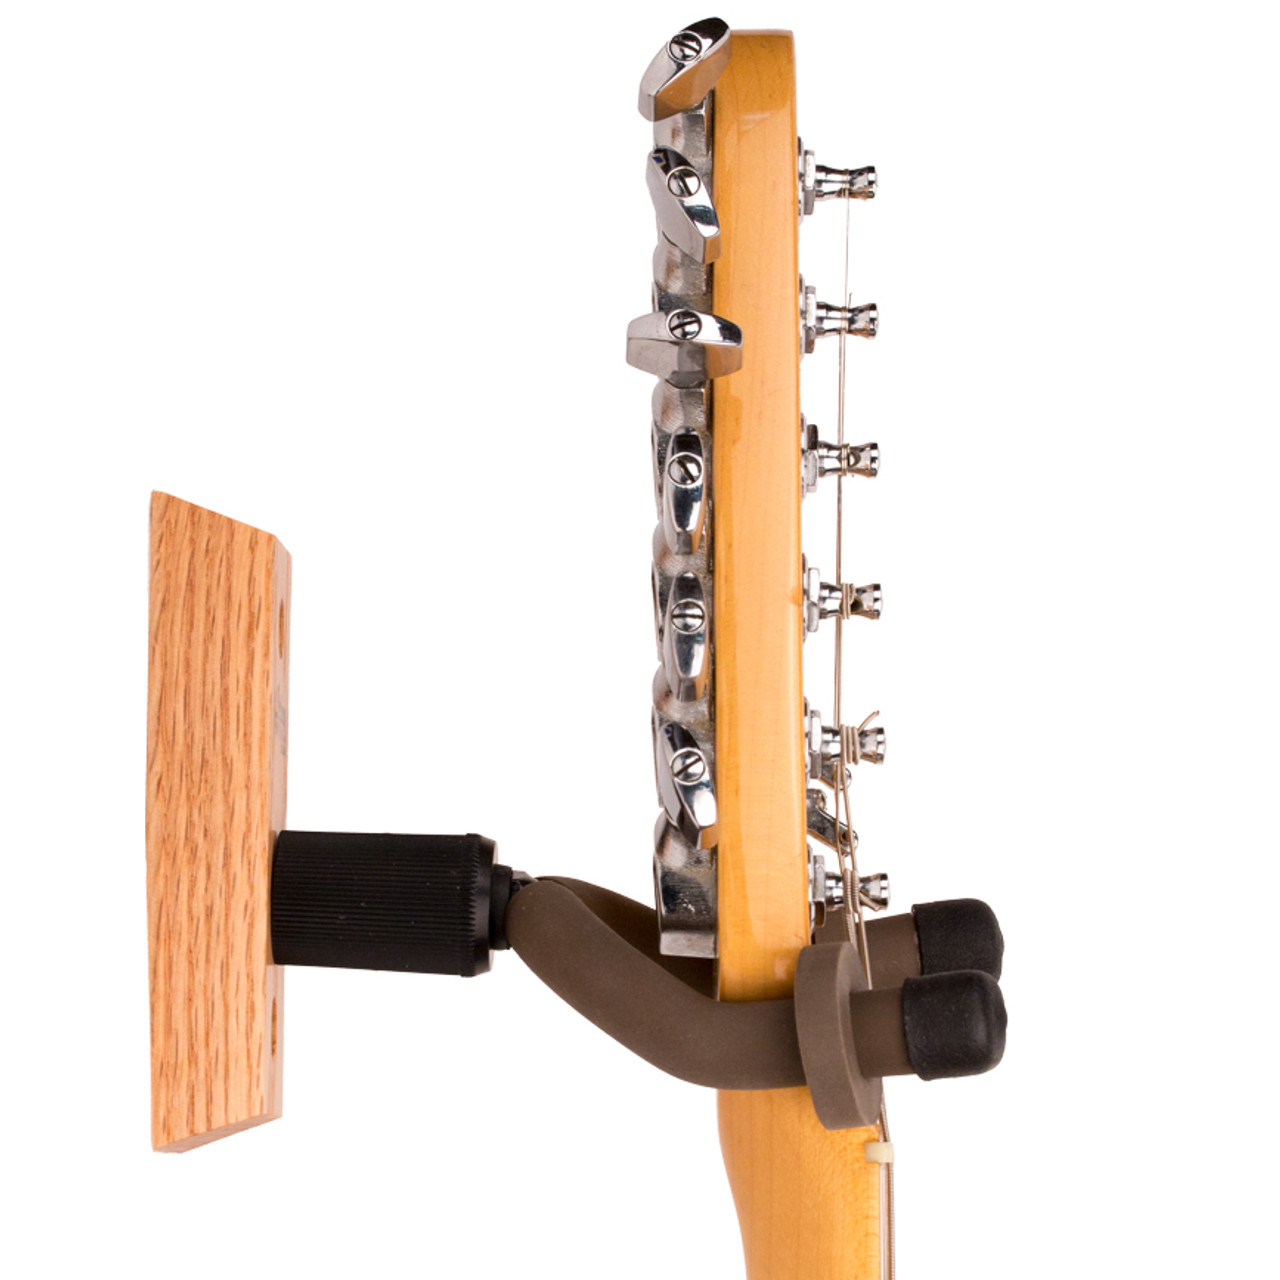 DLDIREcT 1 Horizontal Guitar Wall Mount + 5 Chrome Guitar Hooks Guitar  Accessories: Guitar Rack & Guitar Hanger Wall Mount Guitar Holder St